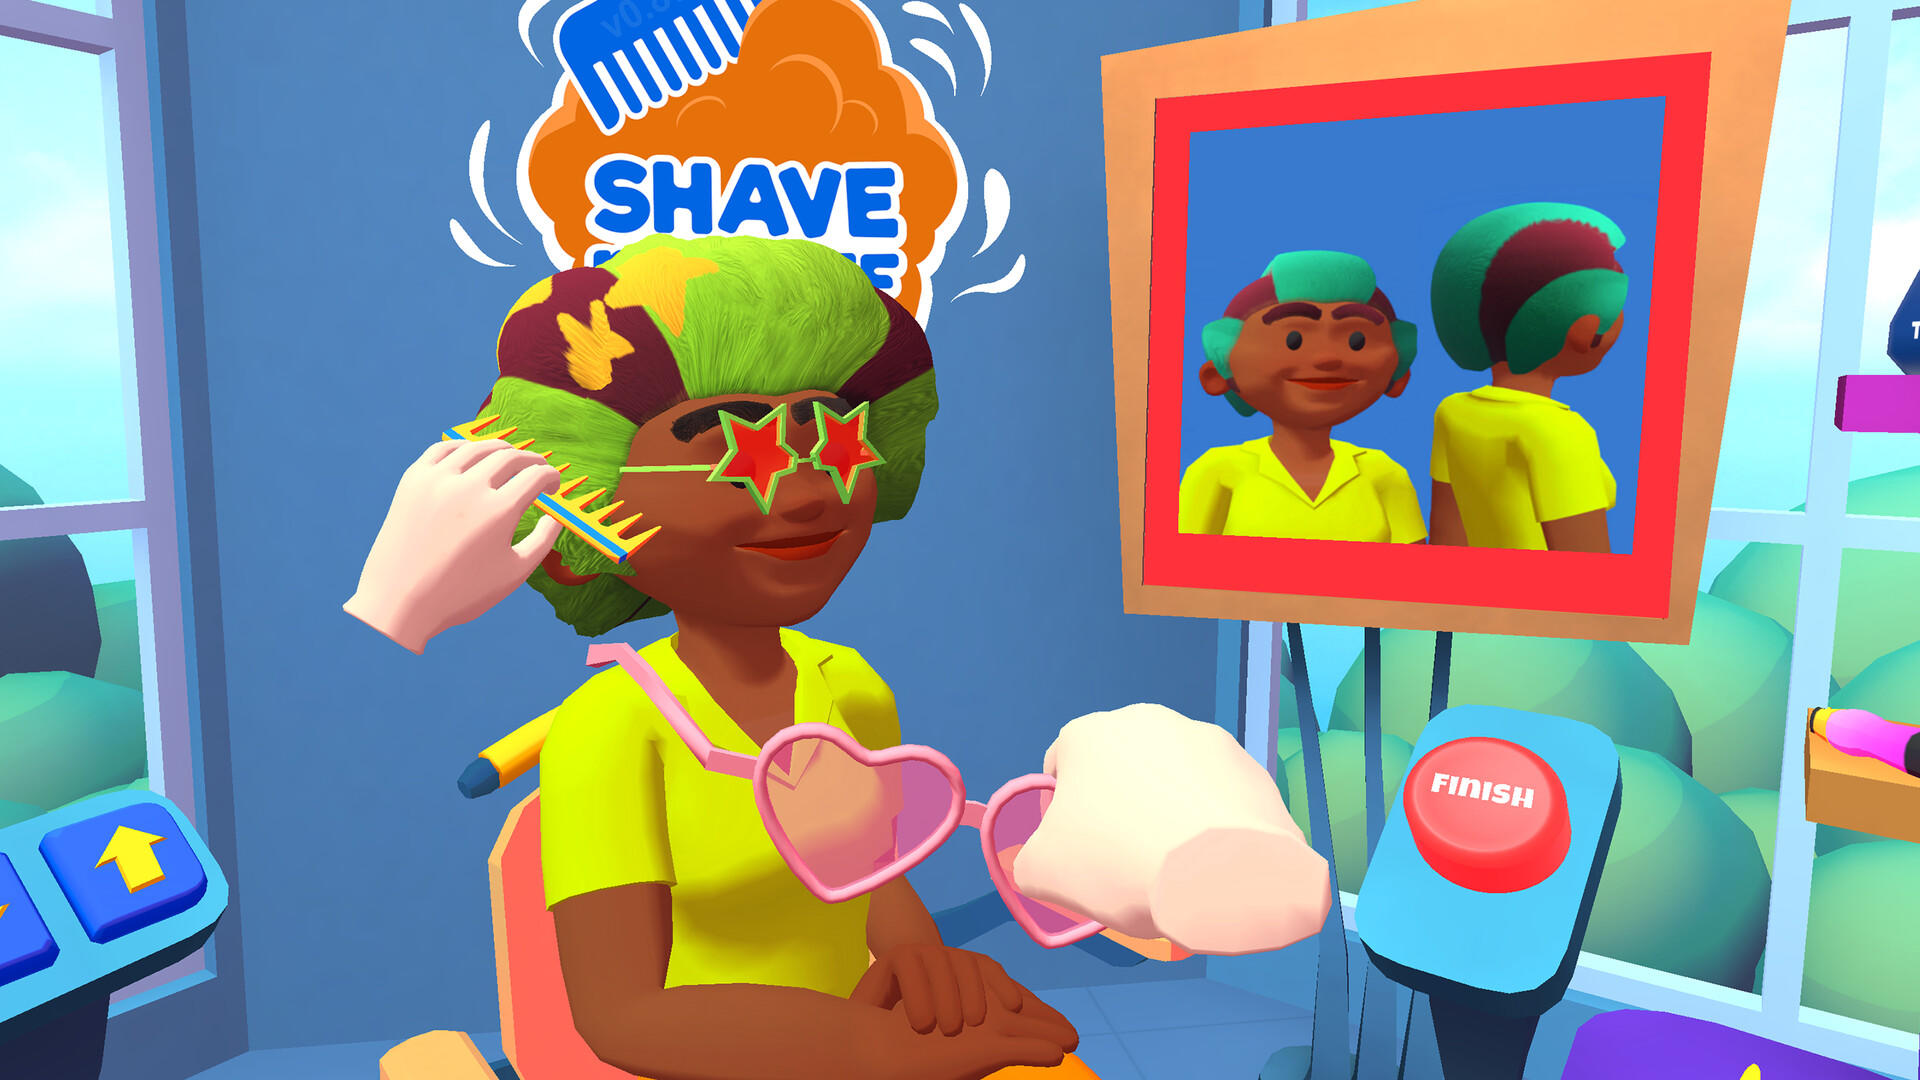 Shave & Stuff screenshot game